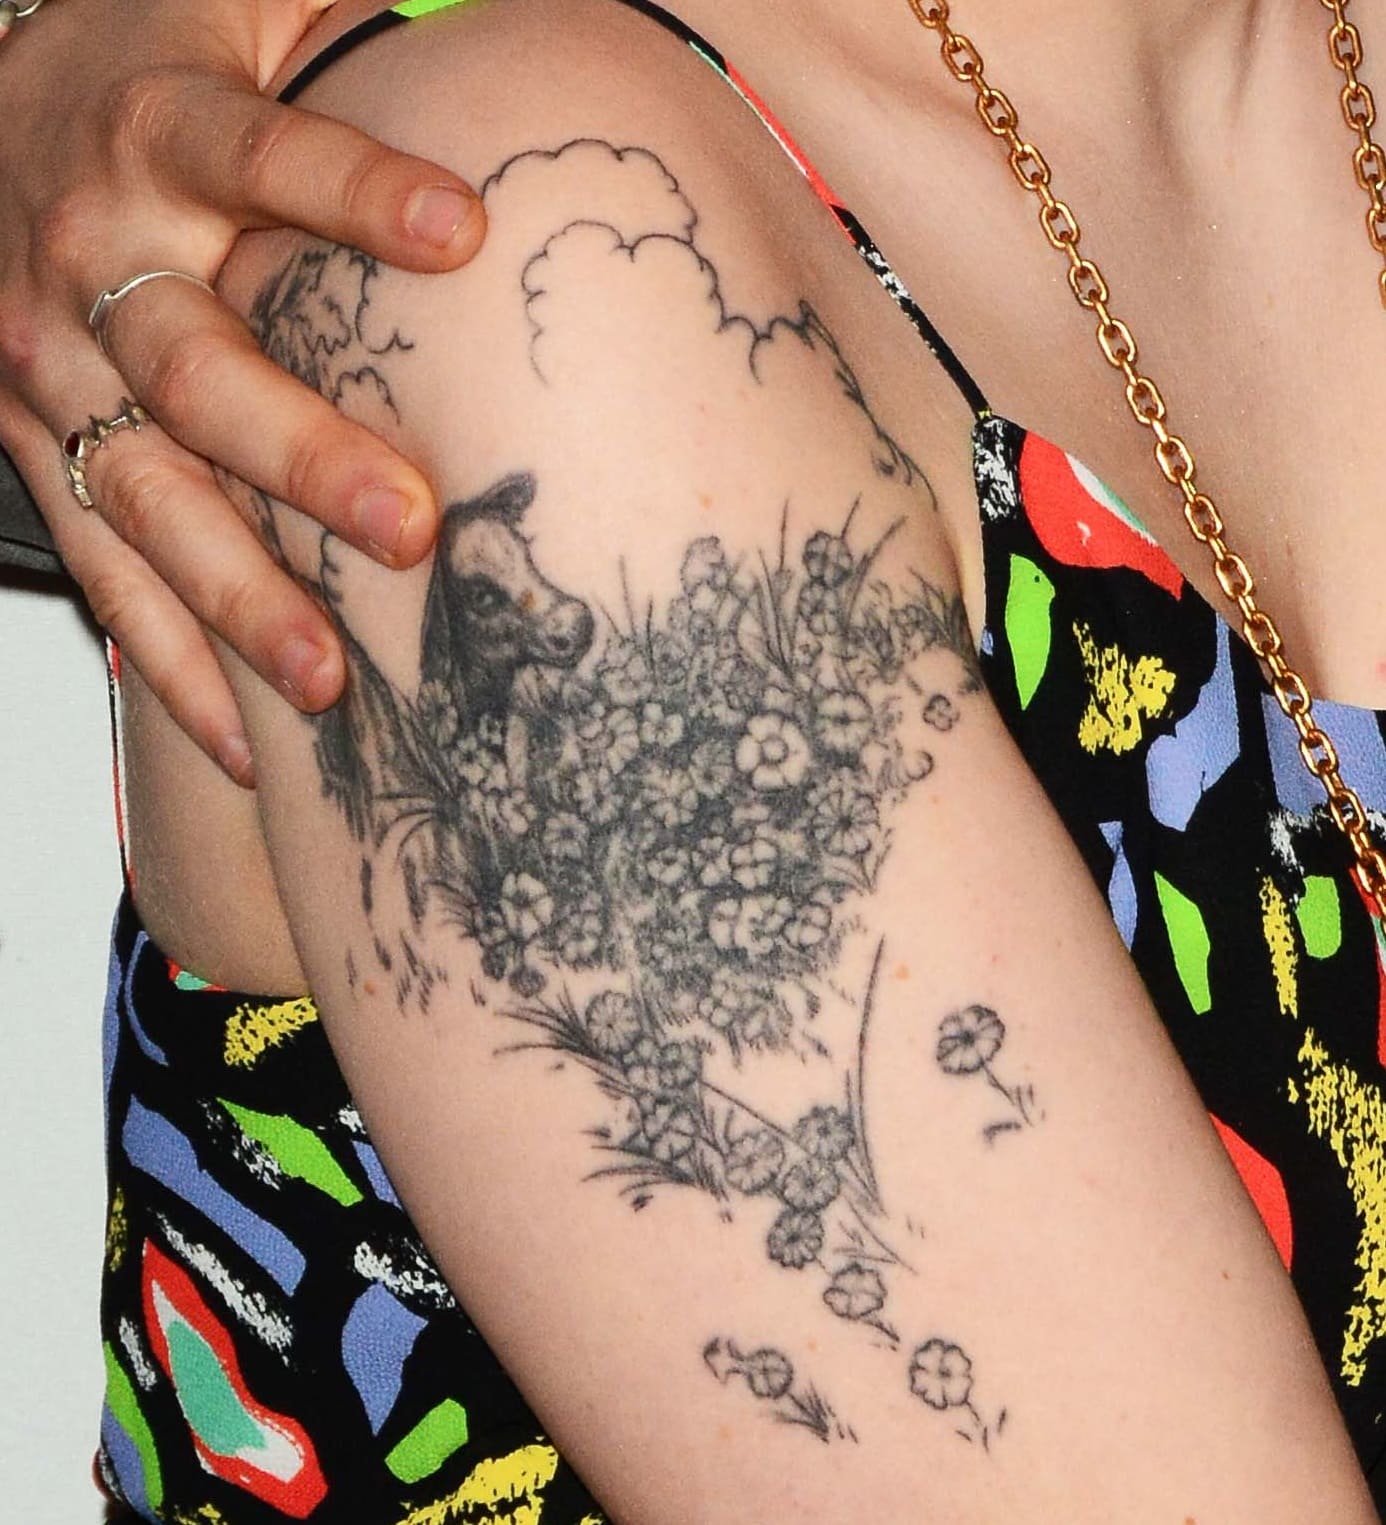 Lena Dunham's touched up Ferdinand the bull tattoo